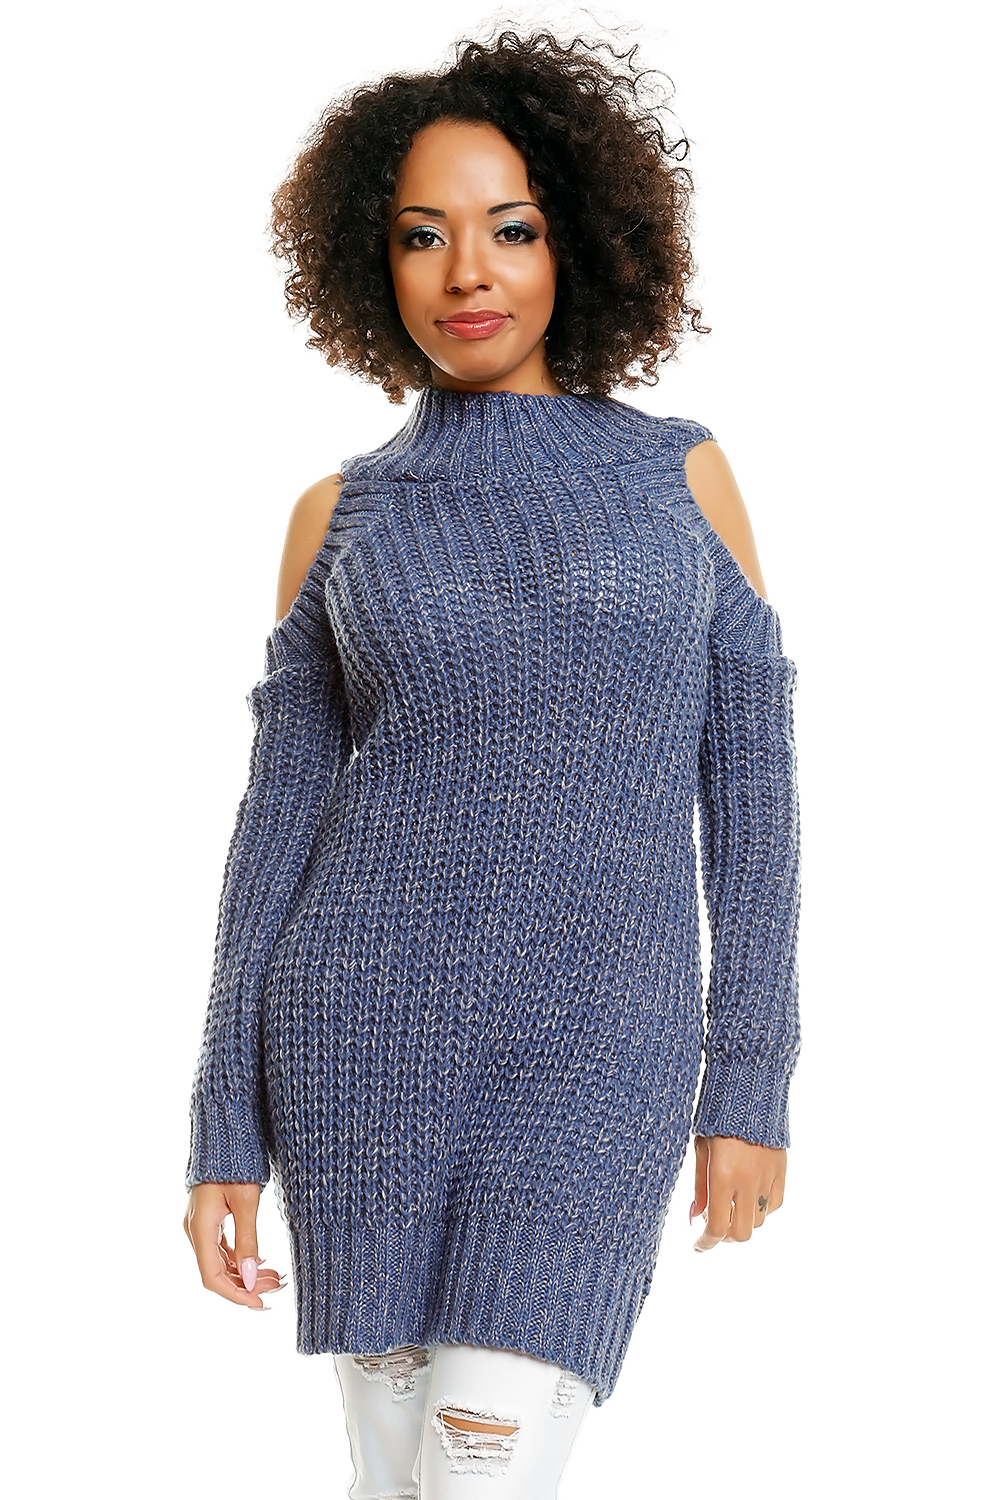 Hard-knitted jumper model 8434..